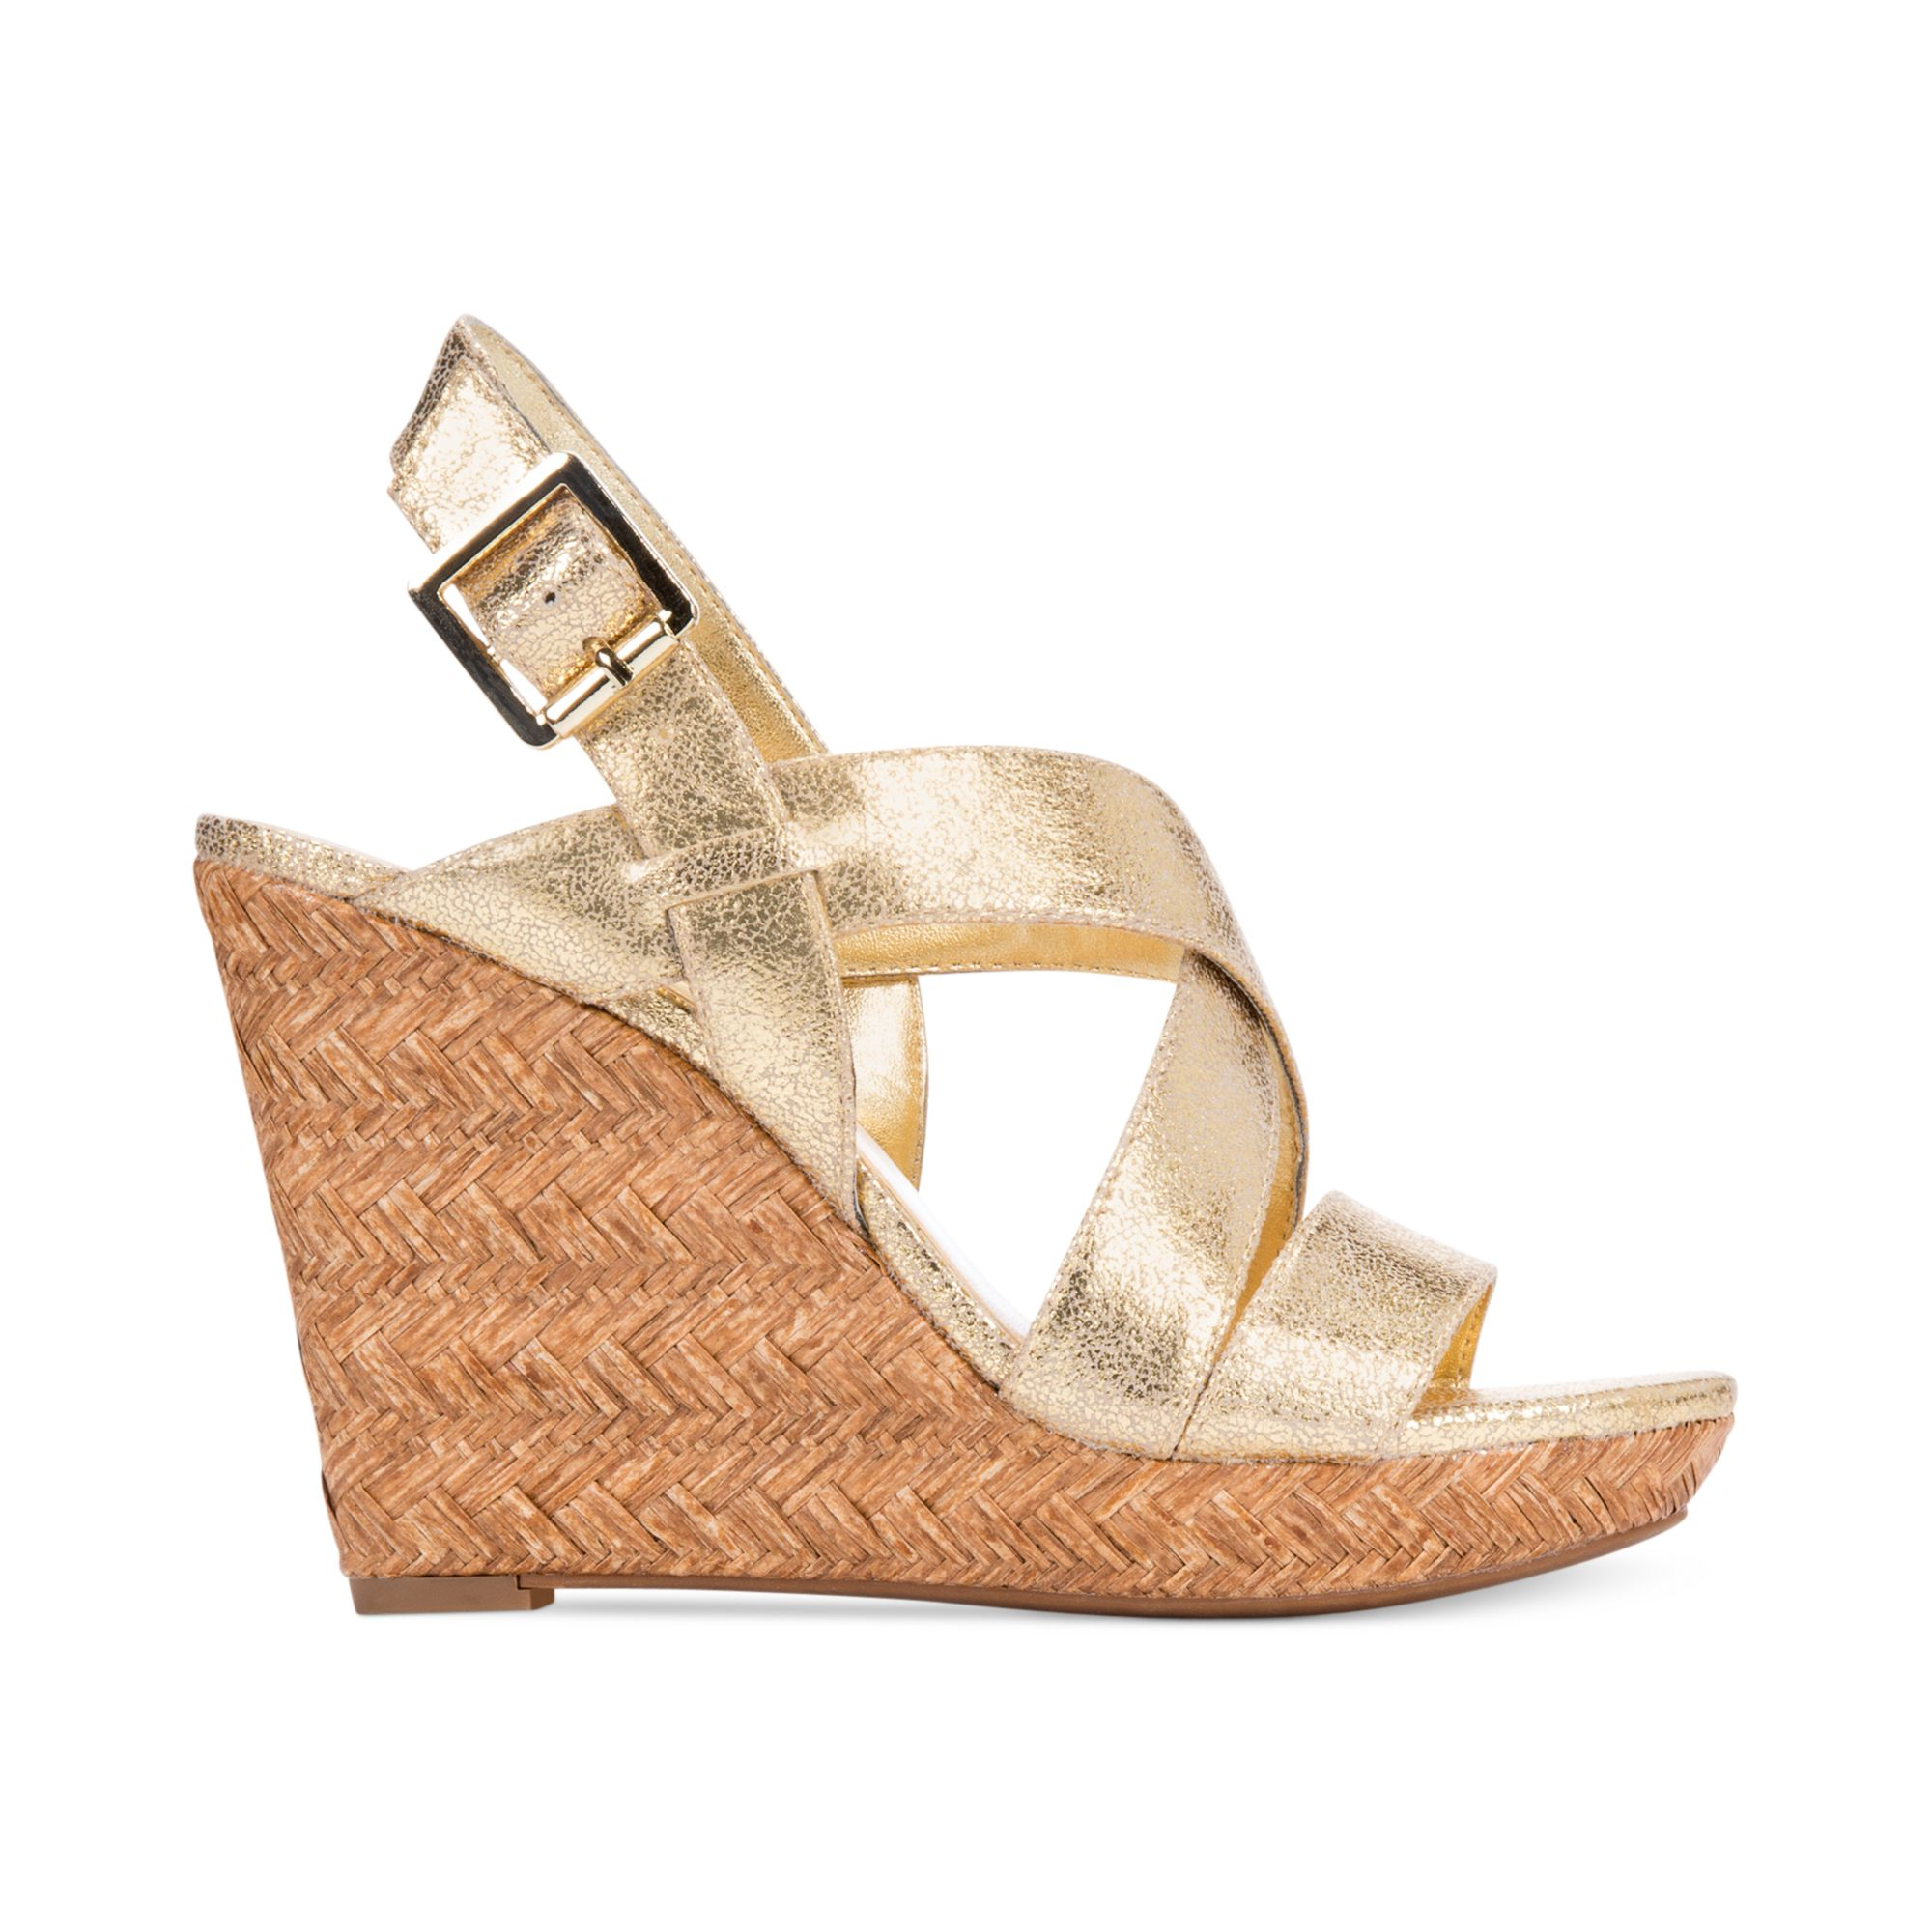 Jessica simpson Jerrimo Platform Wedge Sandals in Metallic | Lyst